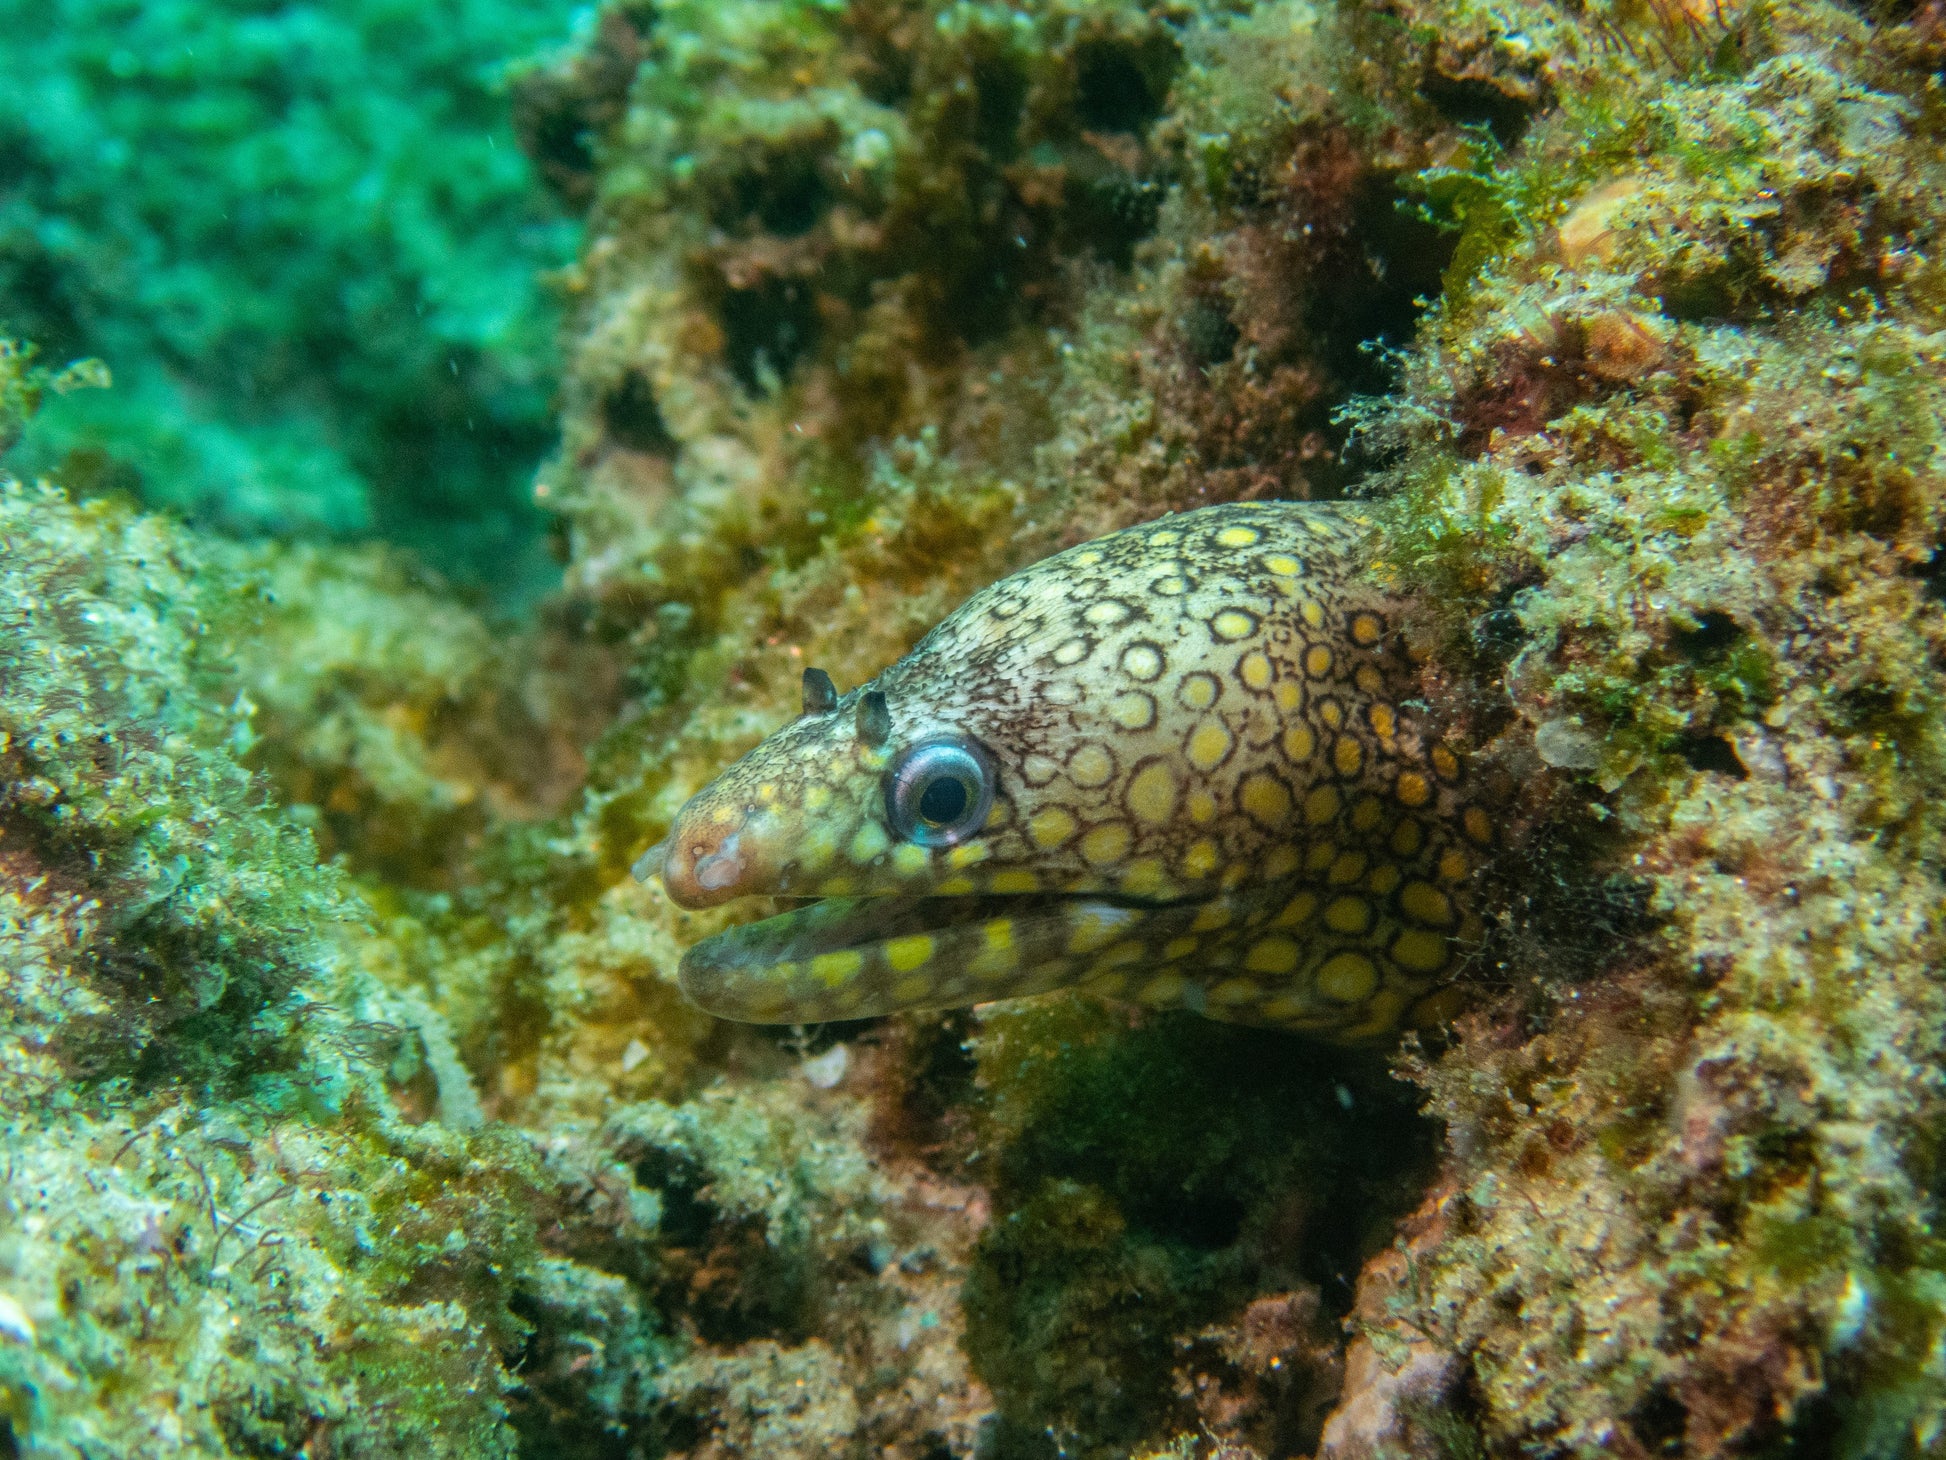 Eel seen between rocks while scuba diving in Los Cabos.